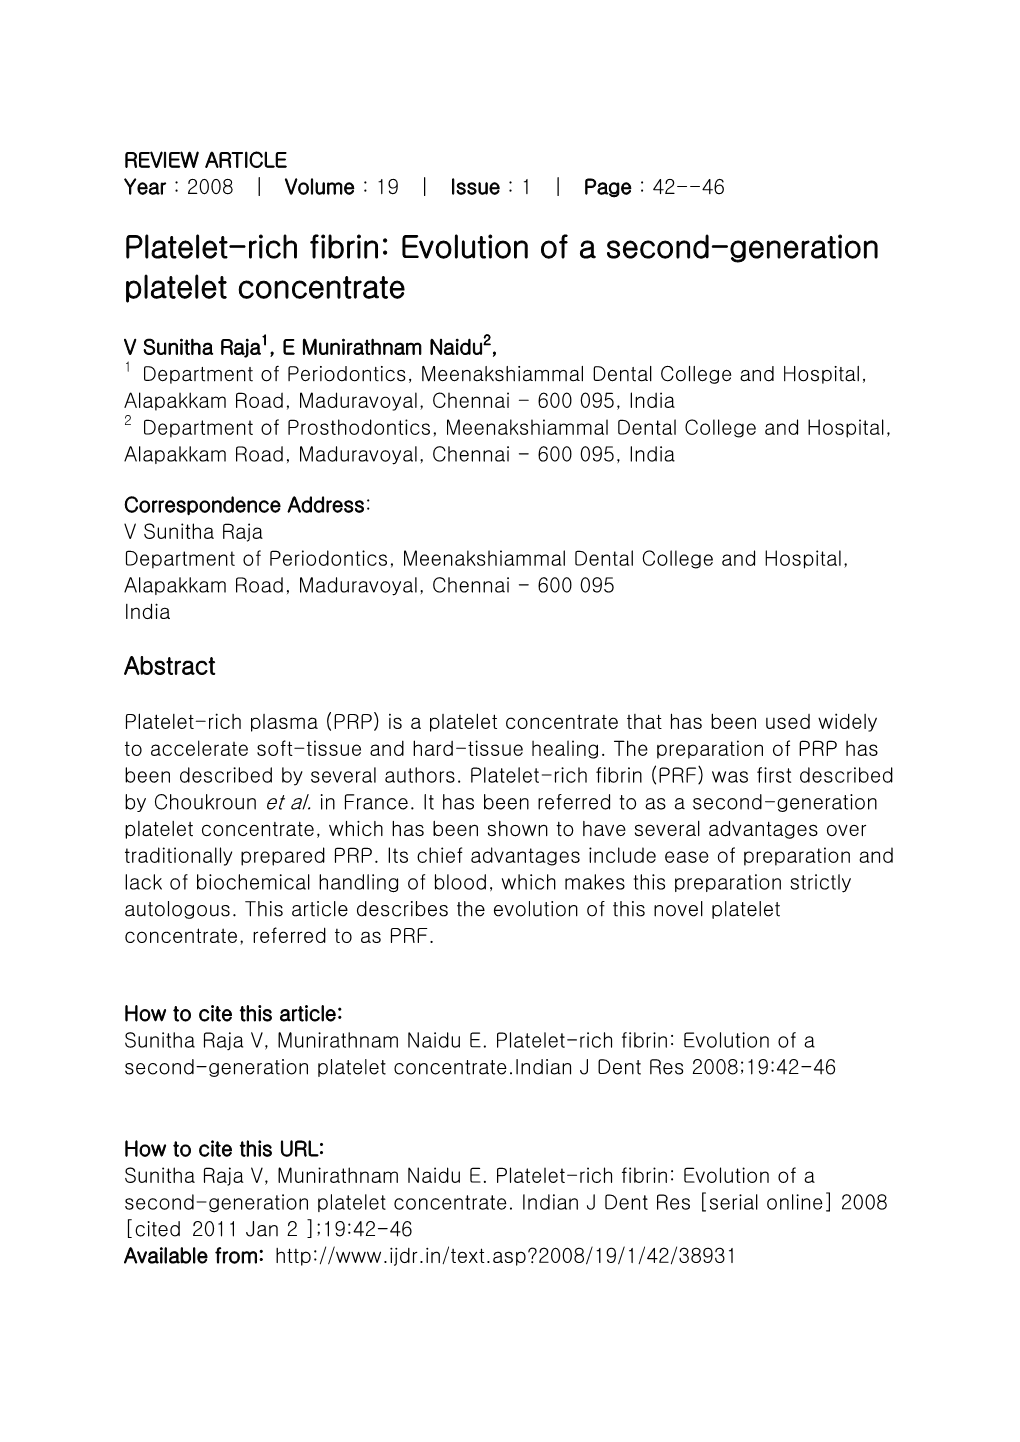 Platelet-Rich Fibrin: Evolution of a Second-Generation Platelet Concentrate